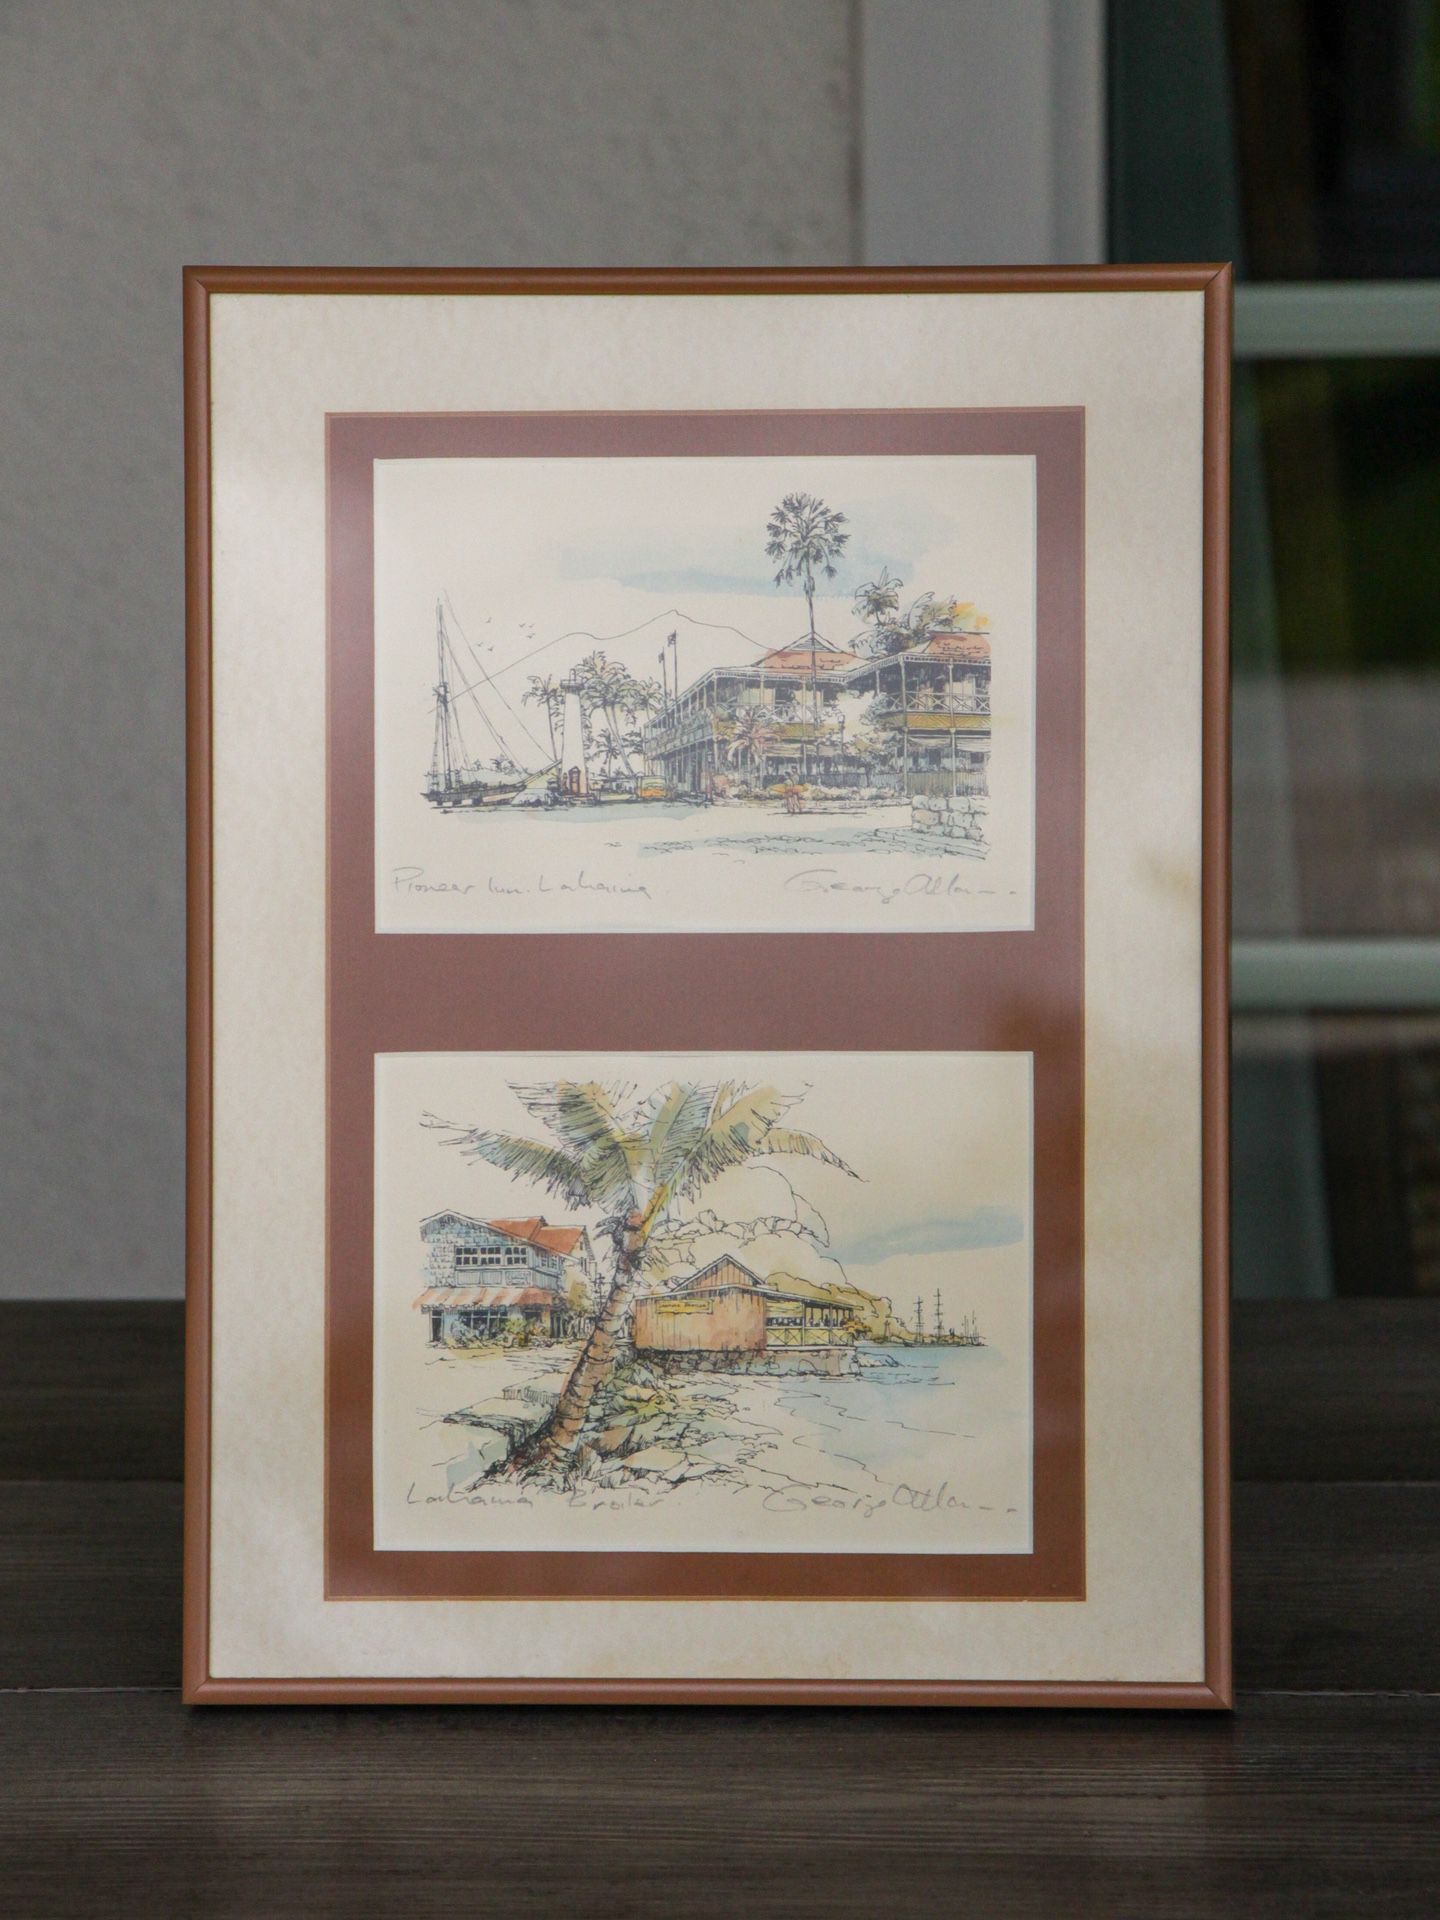 Lahaina George Allan Signed Prints Framed Art